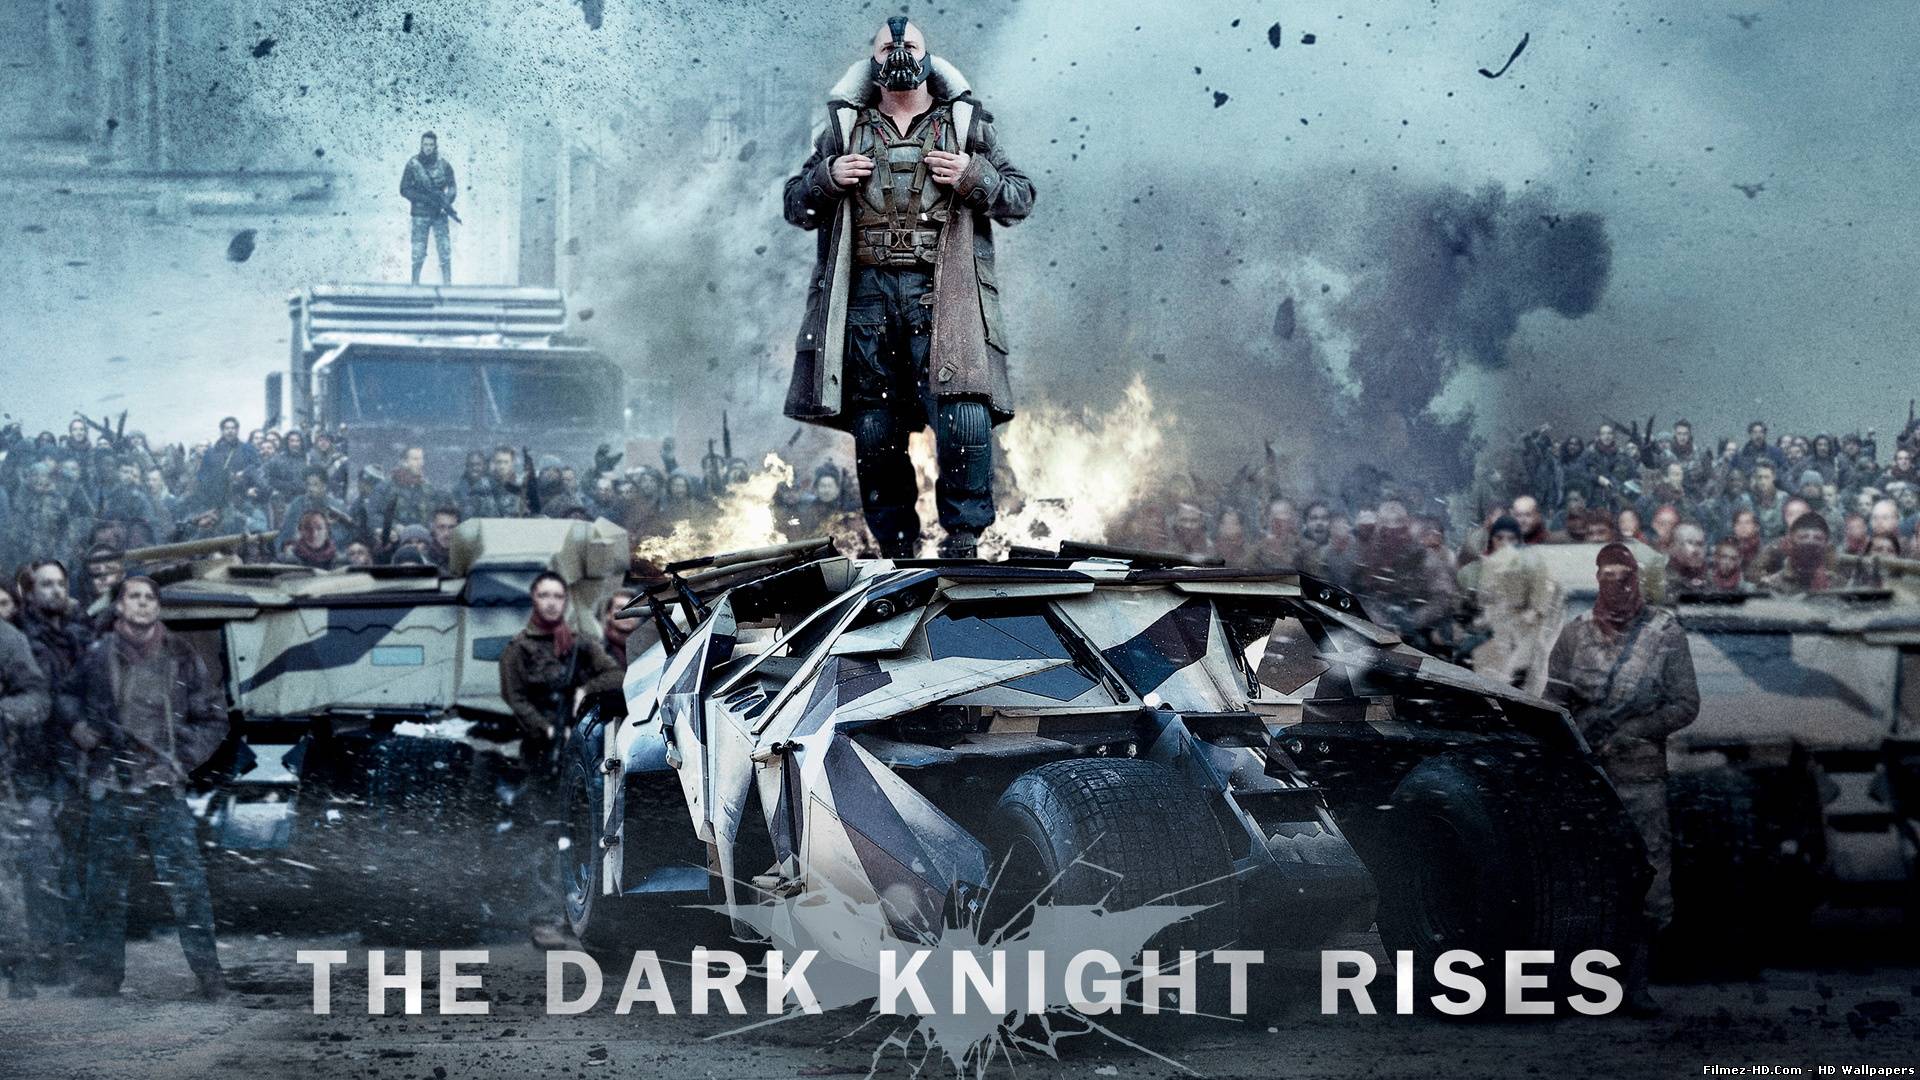 Bane in The Dark Knight Rises